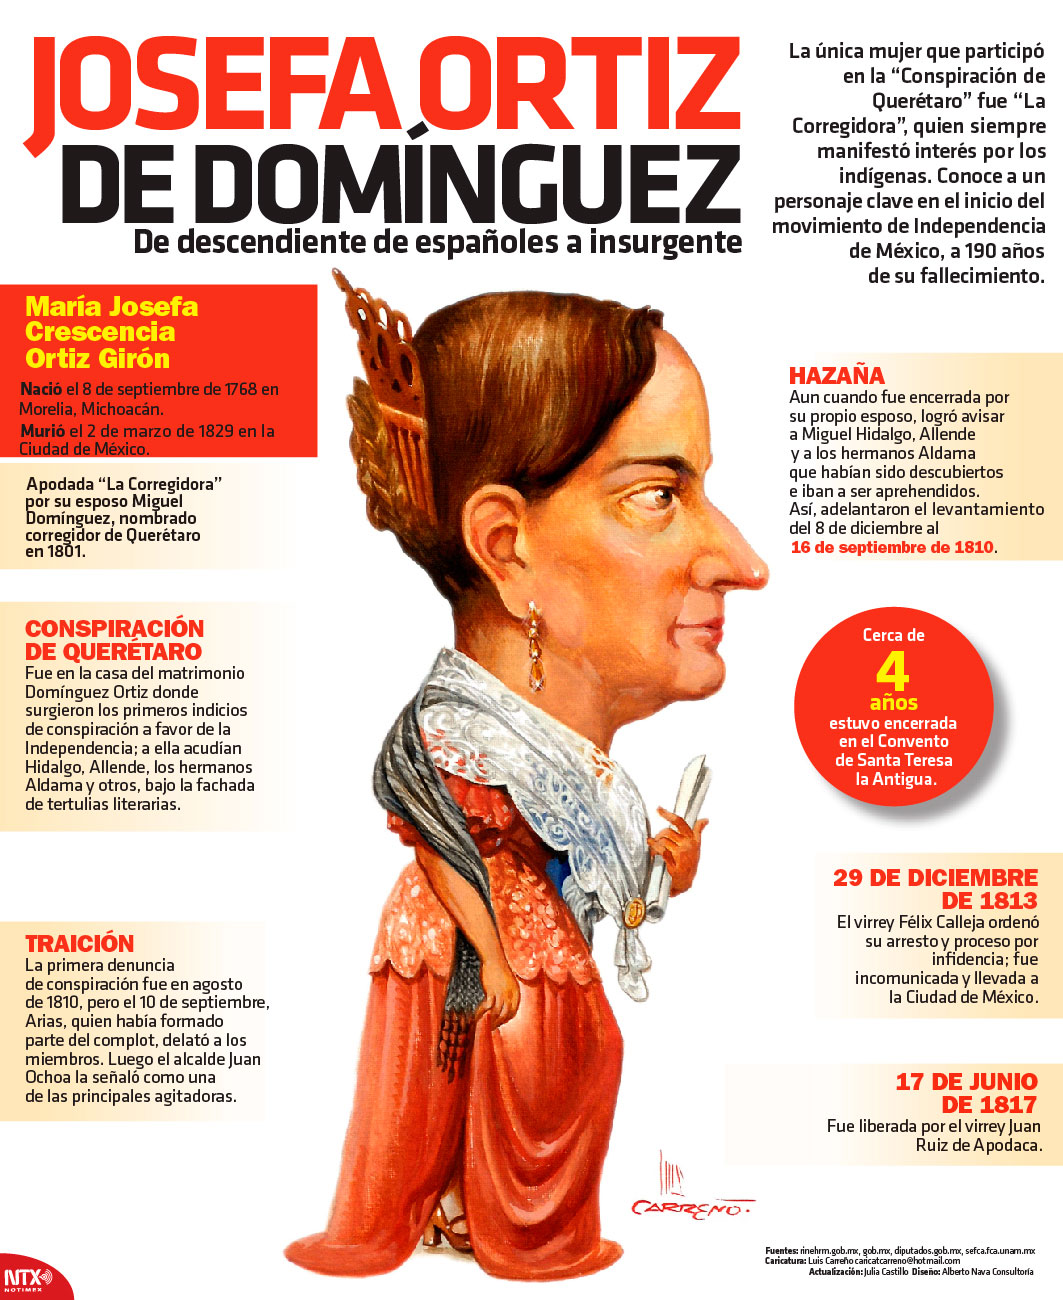 Hoy Tamaulipas - Infografía: Josefa Ortiz de Domínguez